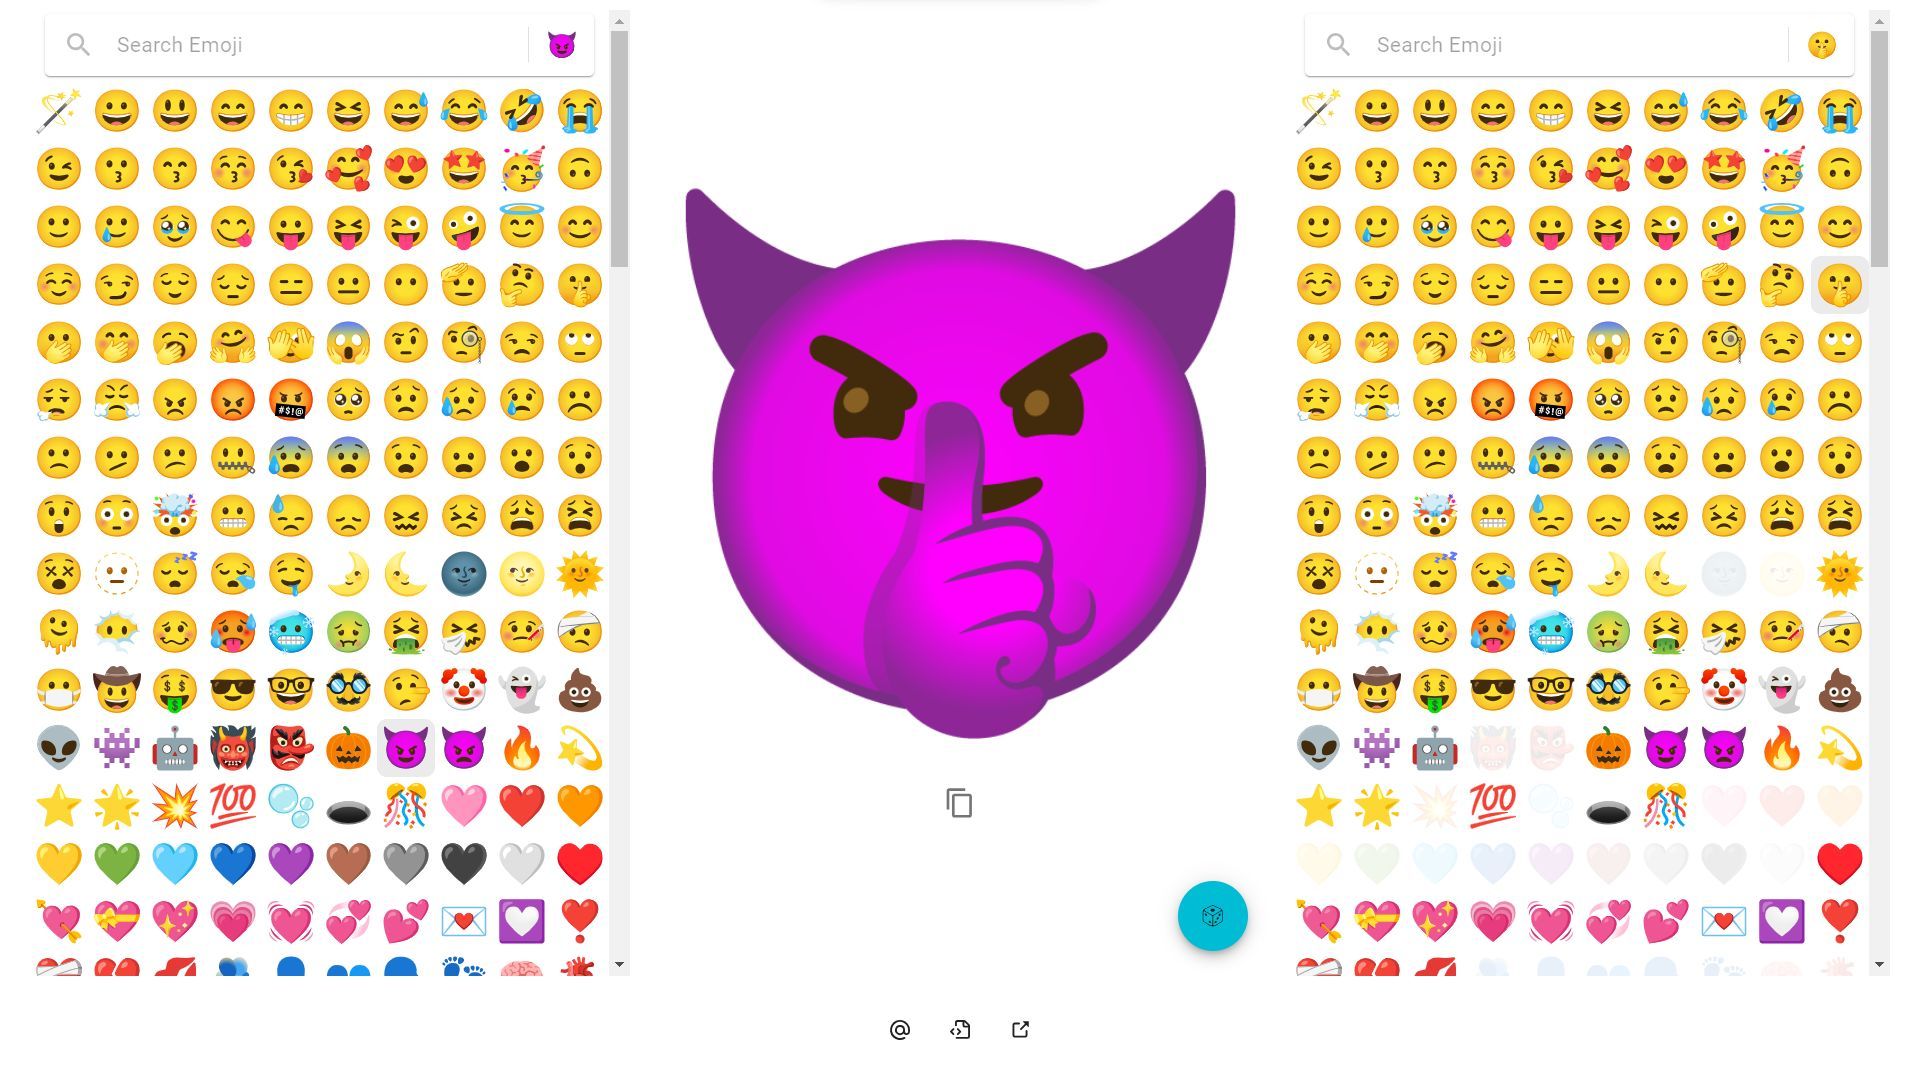 How to combine emojis